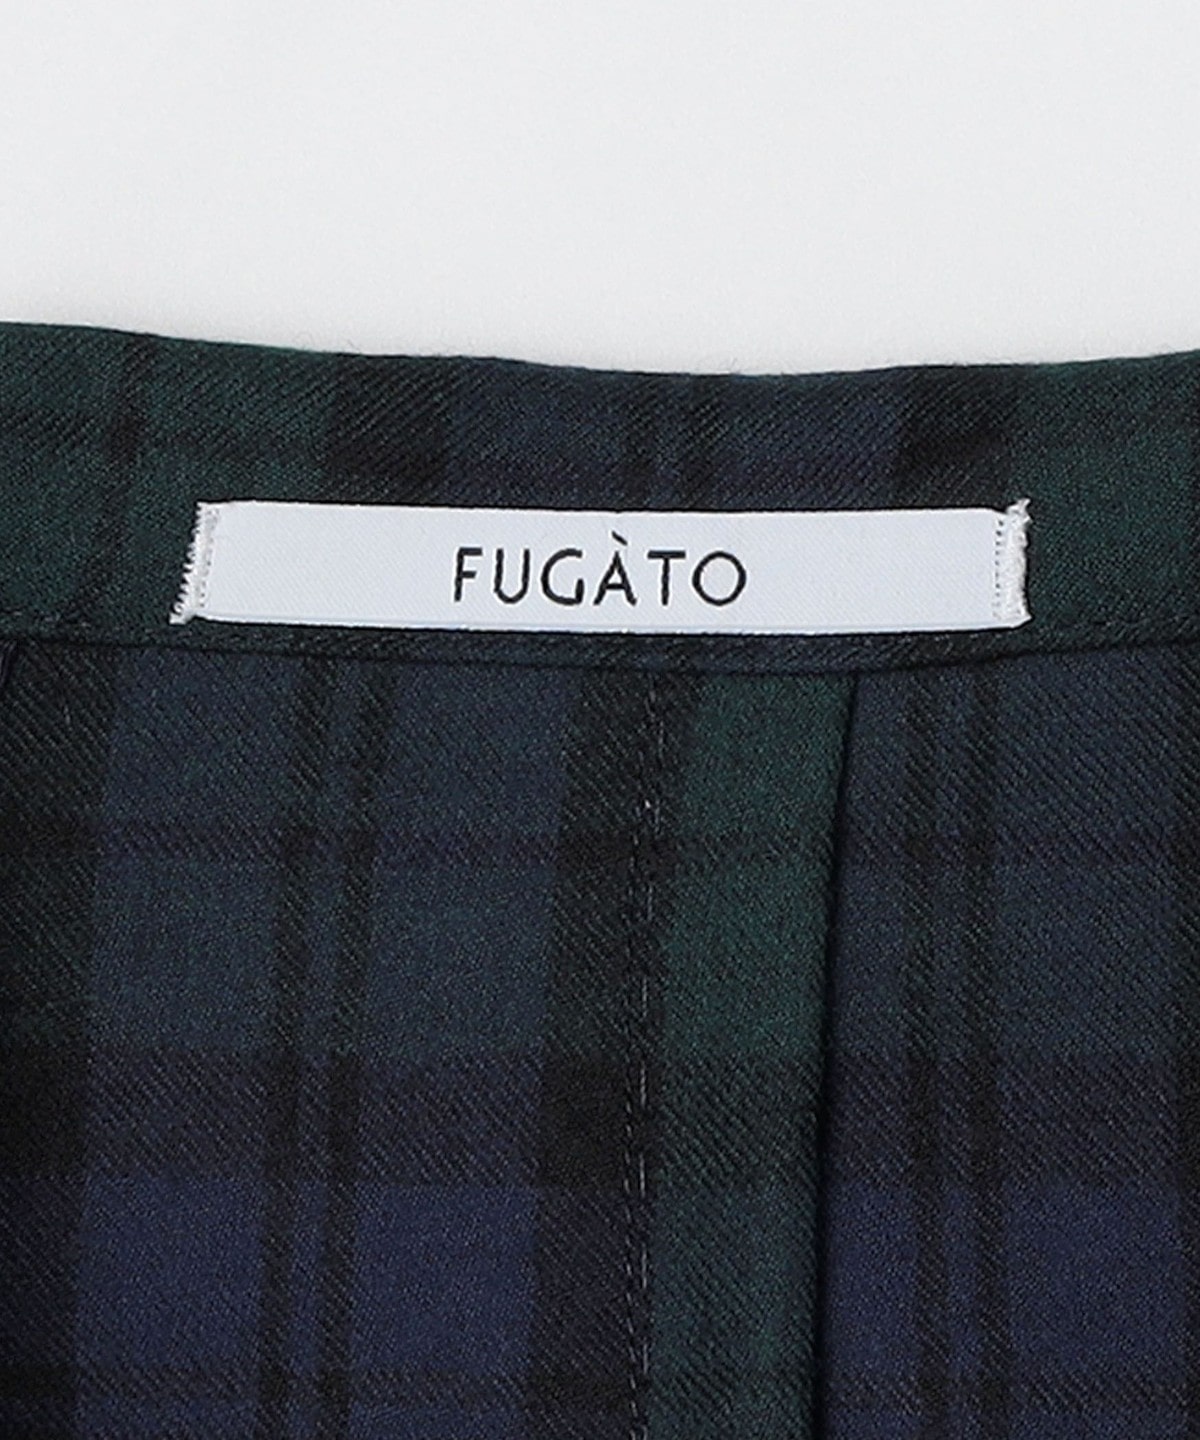 FUGATO: ブラックウォッチ ジャケット: スーツ/ビジネス小物 SHIPS